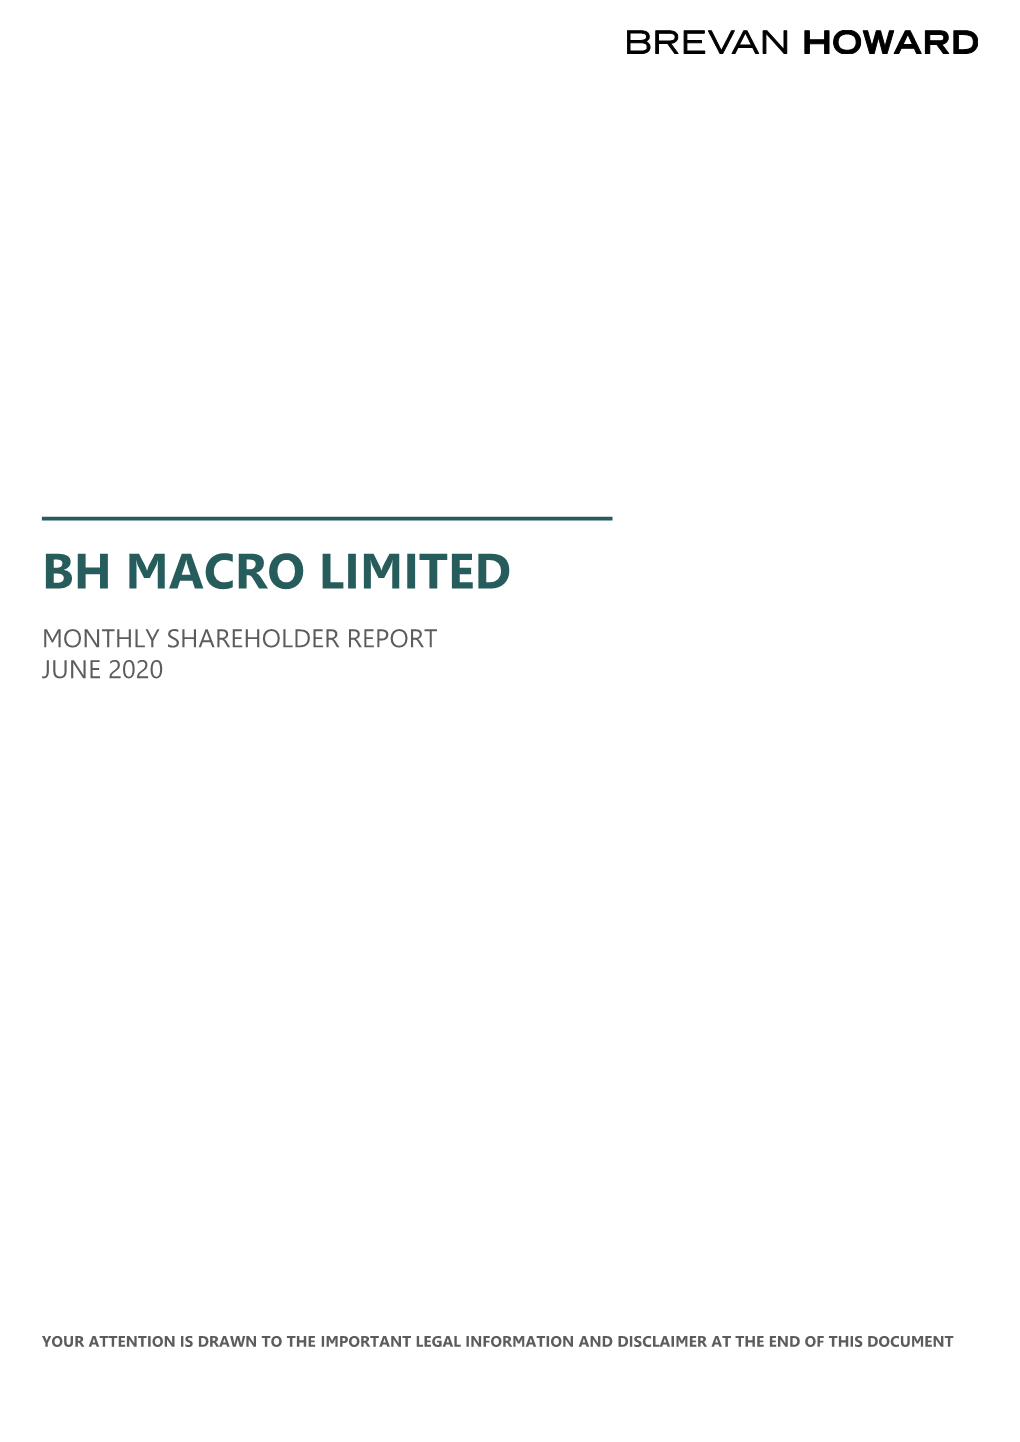 Bh Macro Limited